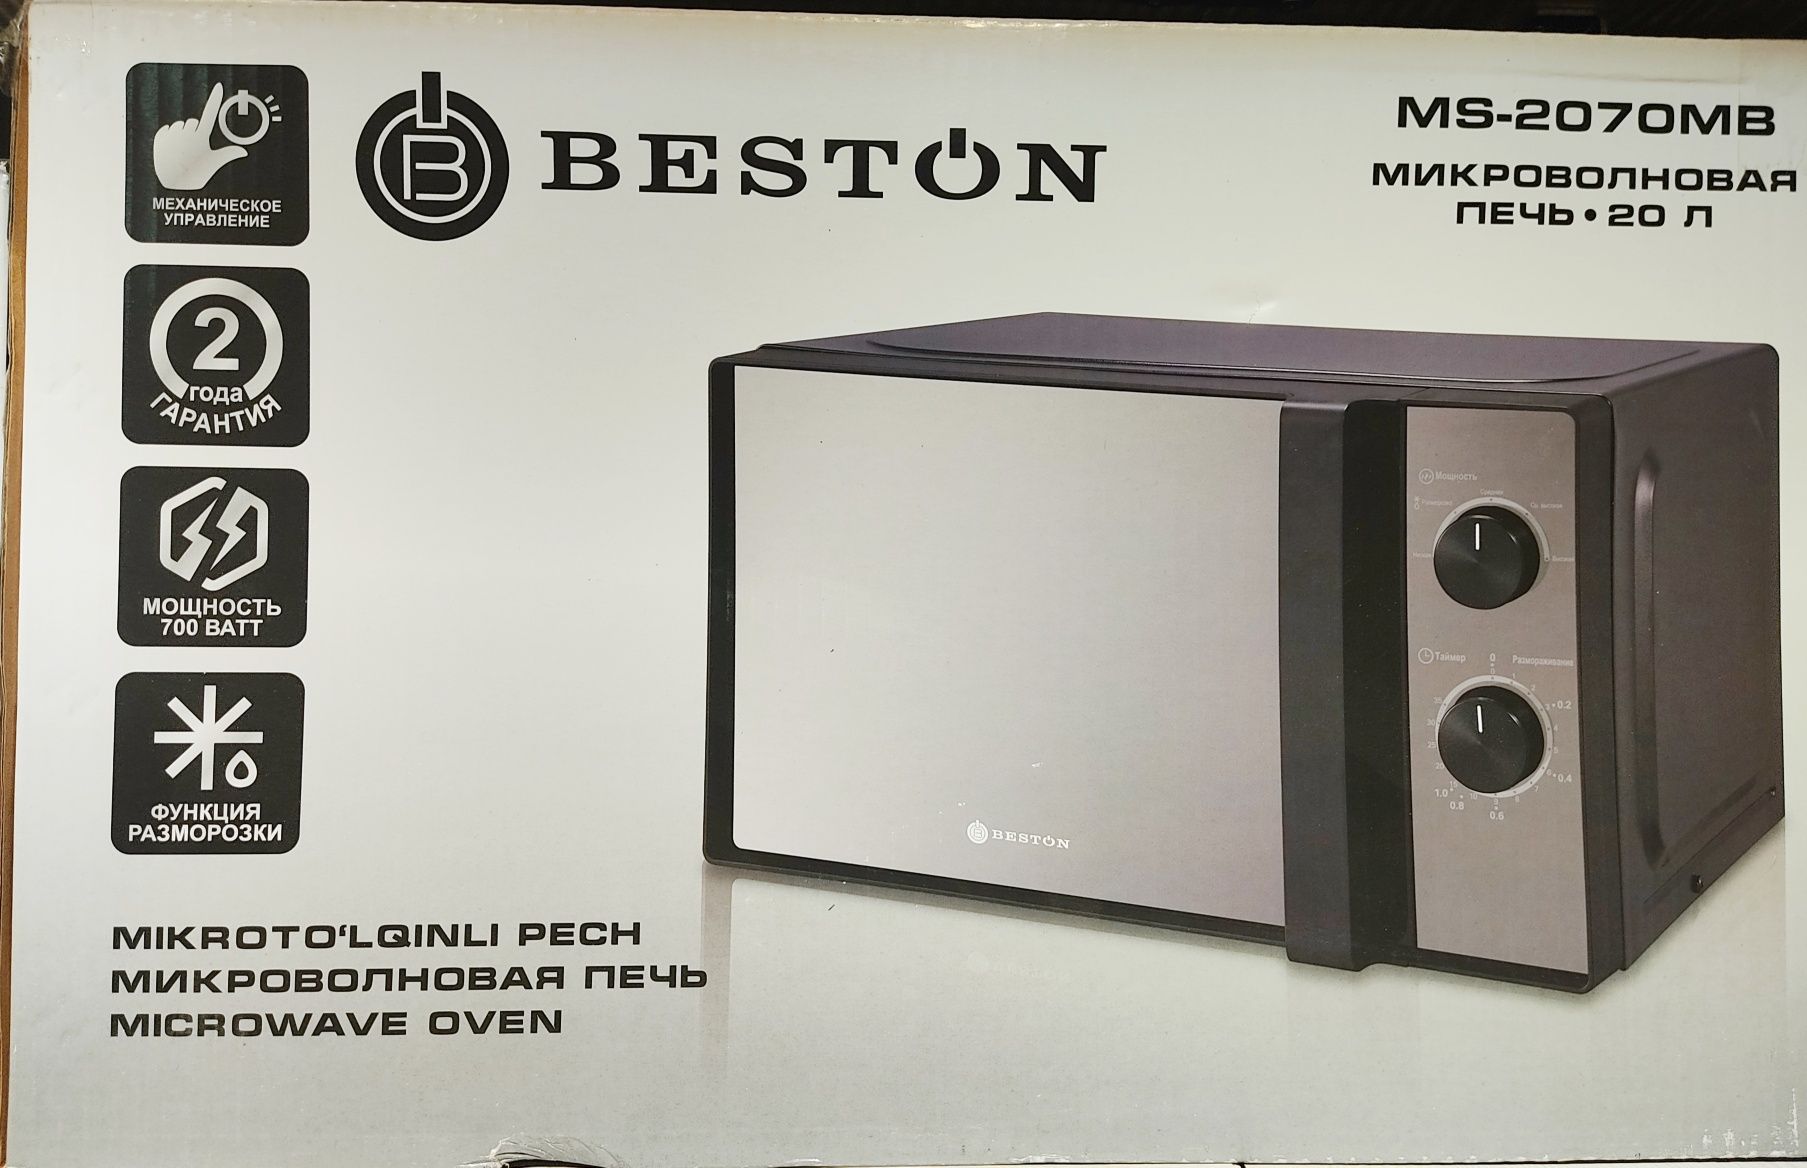 Супер цена Микроволновая печь Микроволновка Beston!